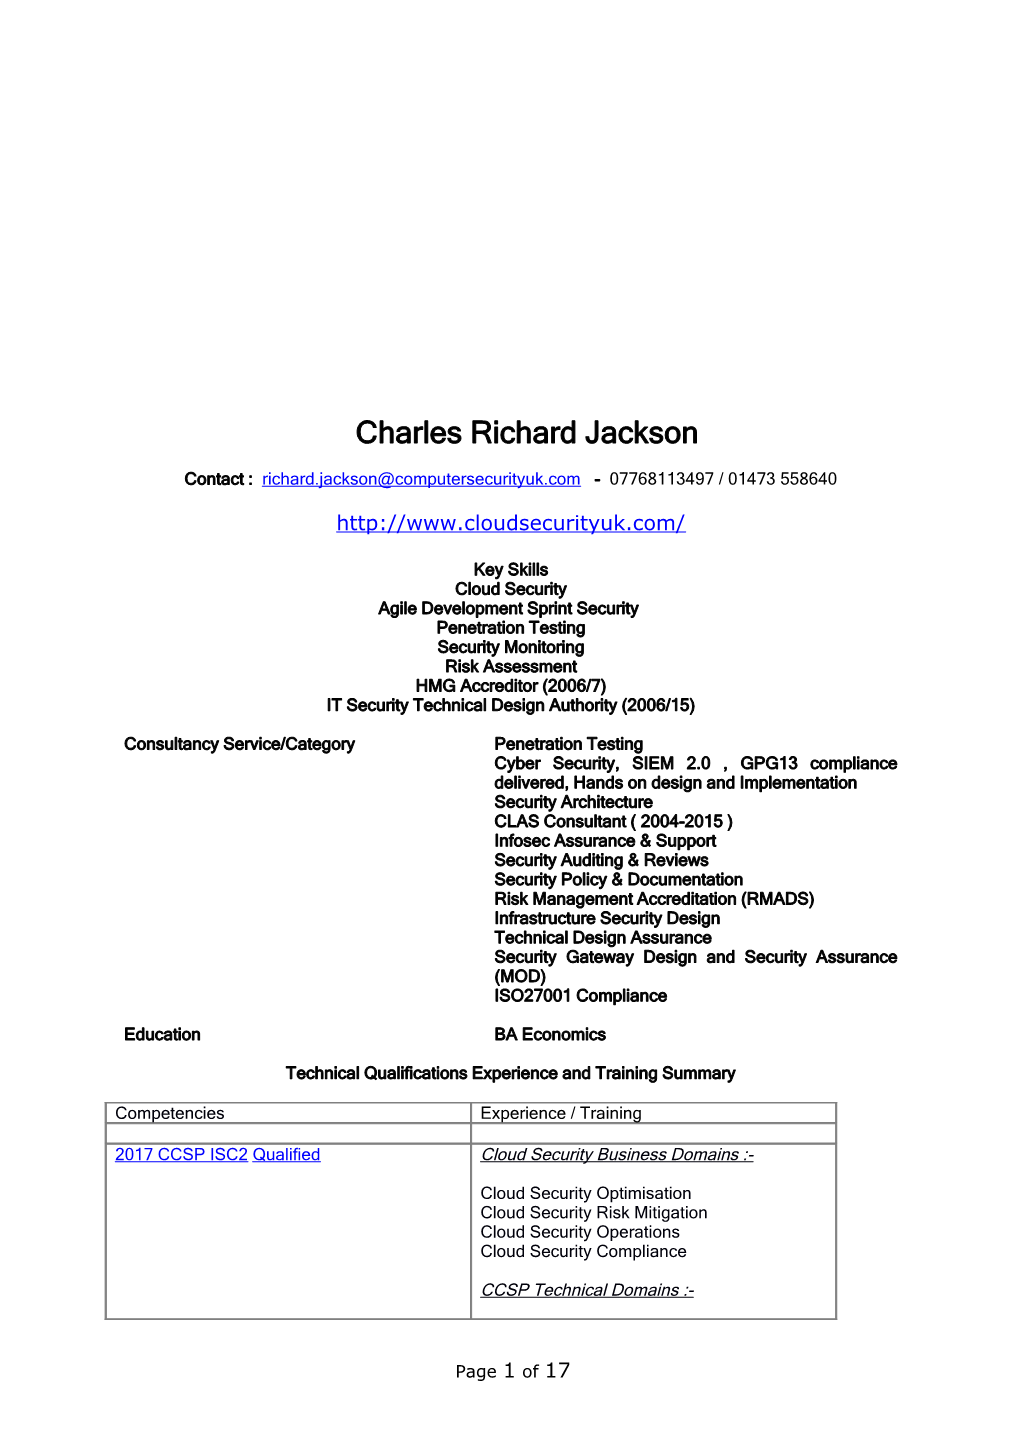 Charles Richard Jackson